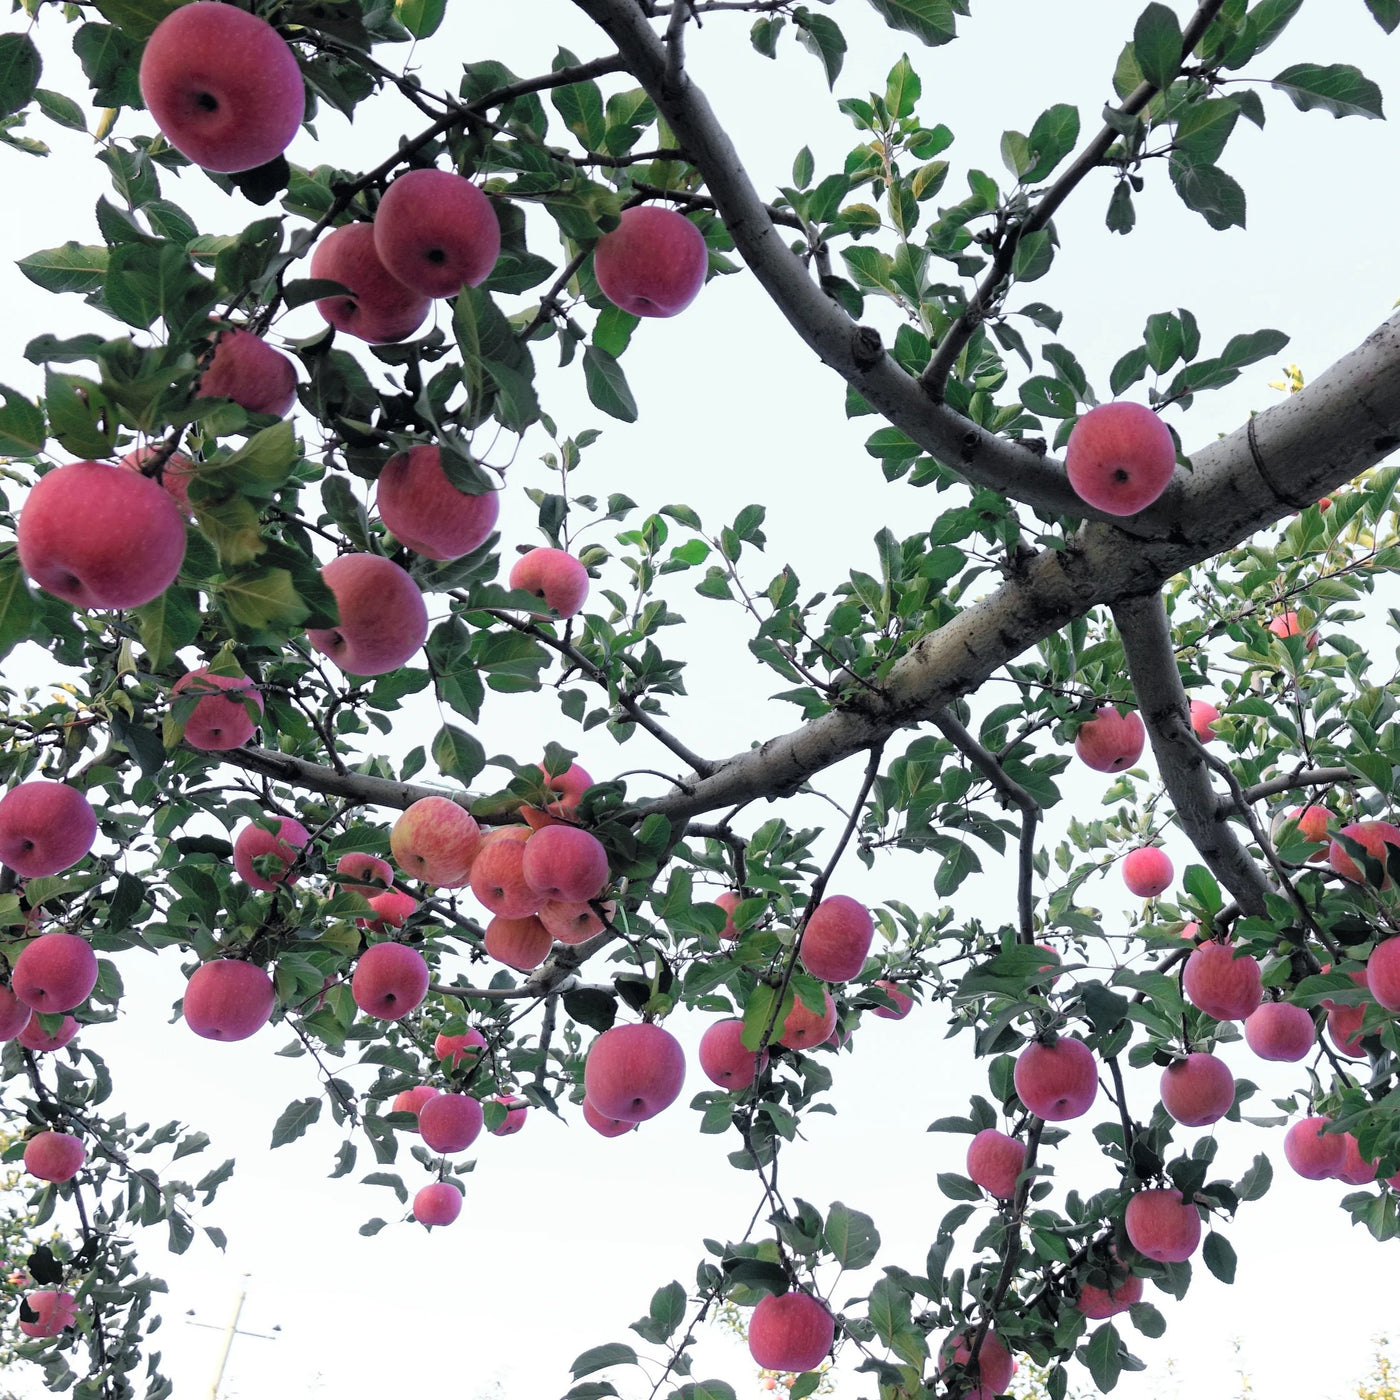 Apple Trees - Fuji